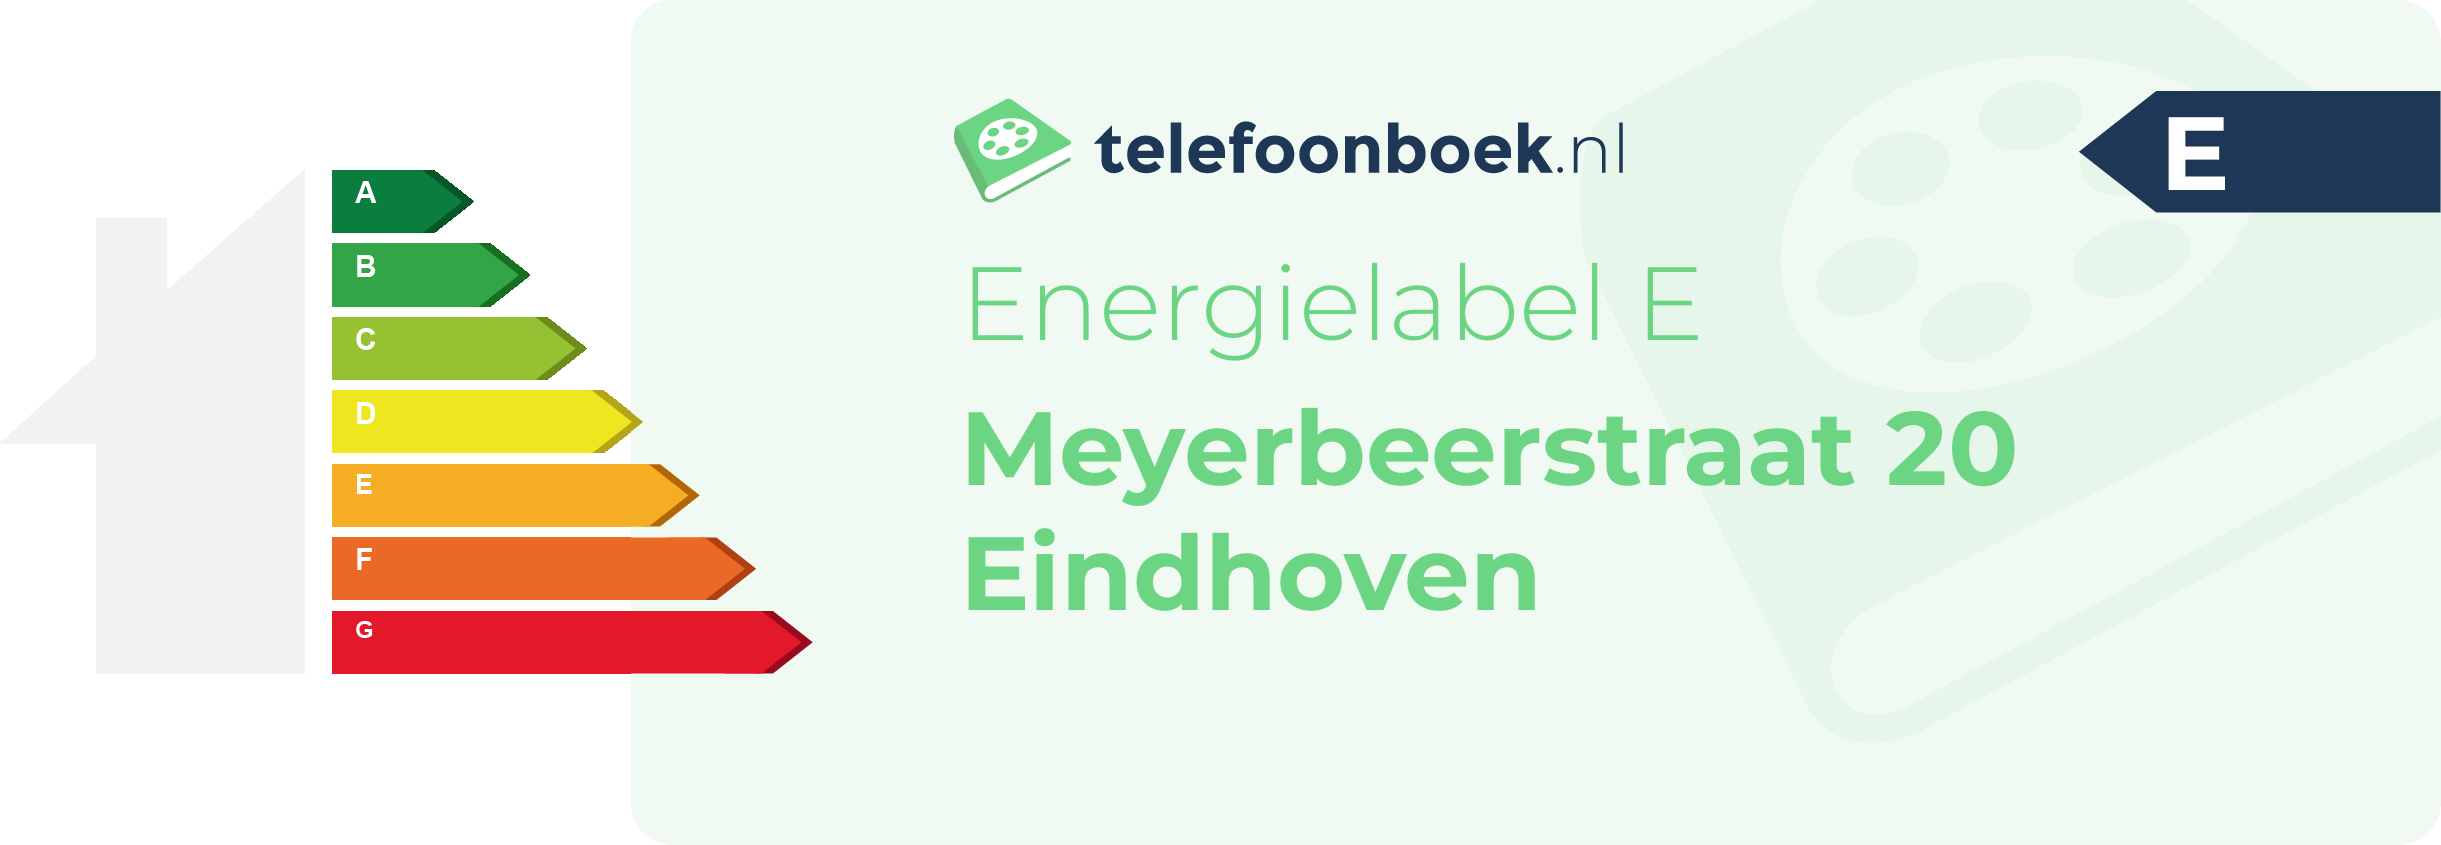 Energielabel Meyerbeerstraat 20 Eindhoven